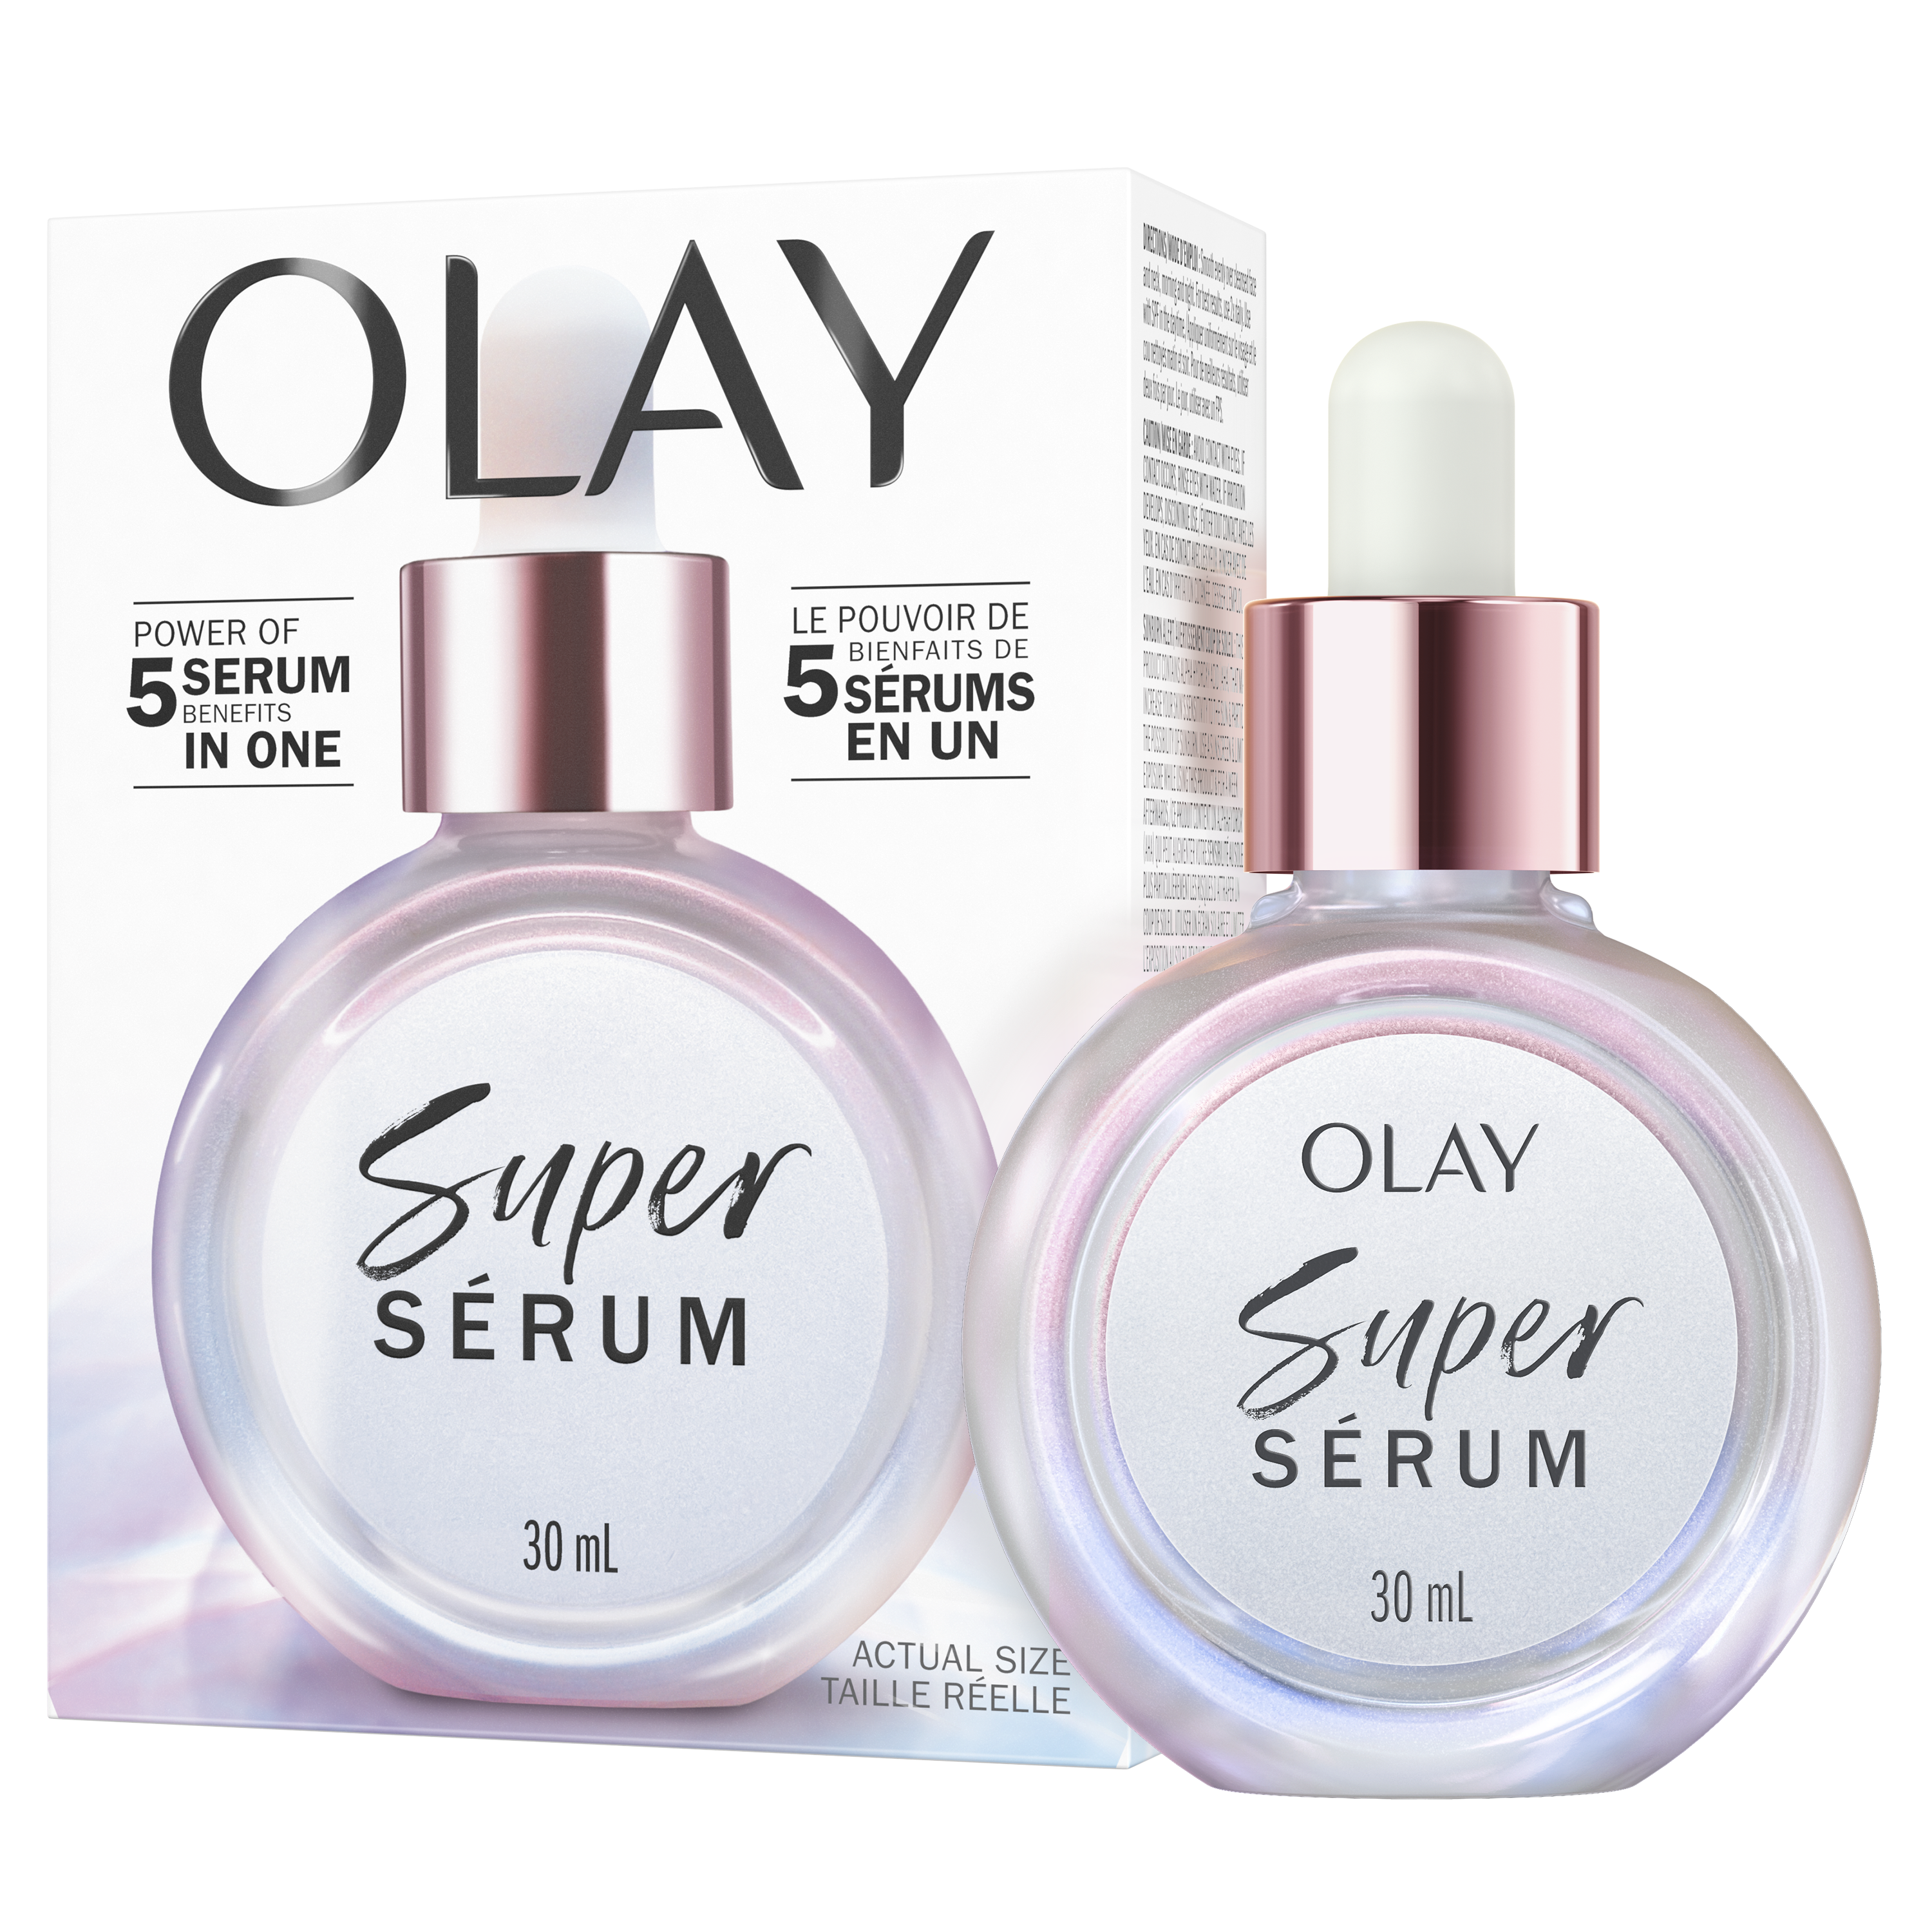 Olay Super Serum 30 mL (1.0 fl OZ)